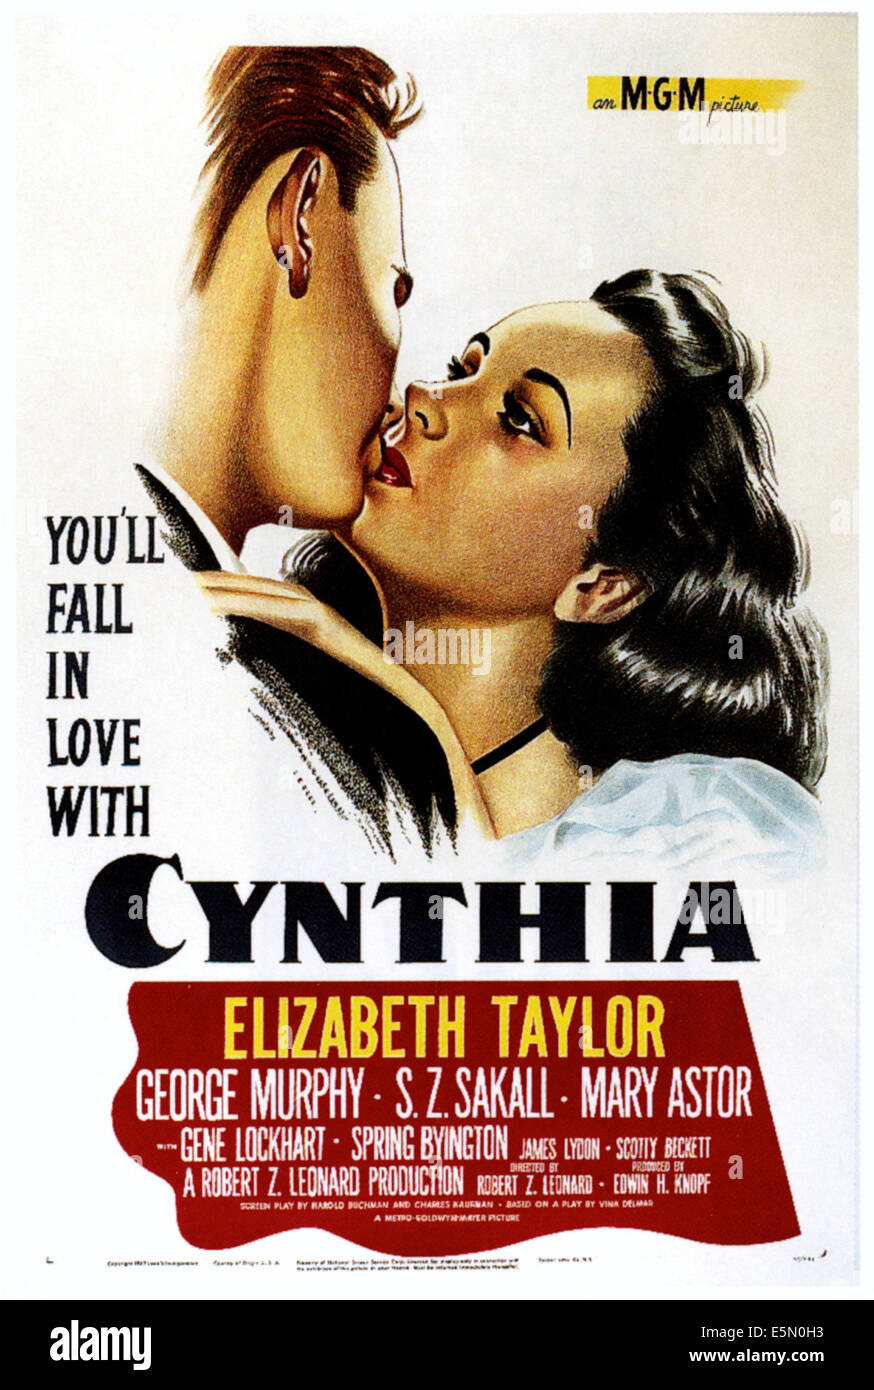 CYNTHIA, Elizabeth Taylor, 1947 Stock Photo